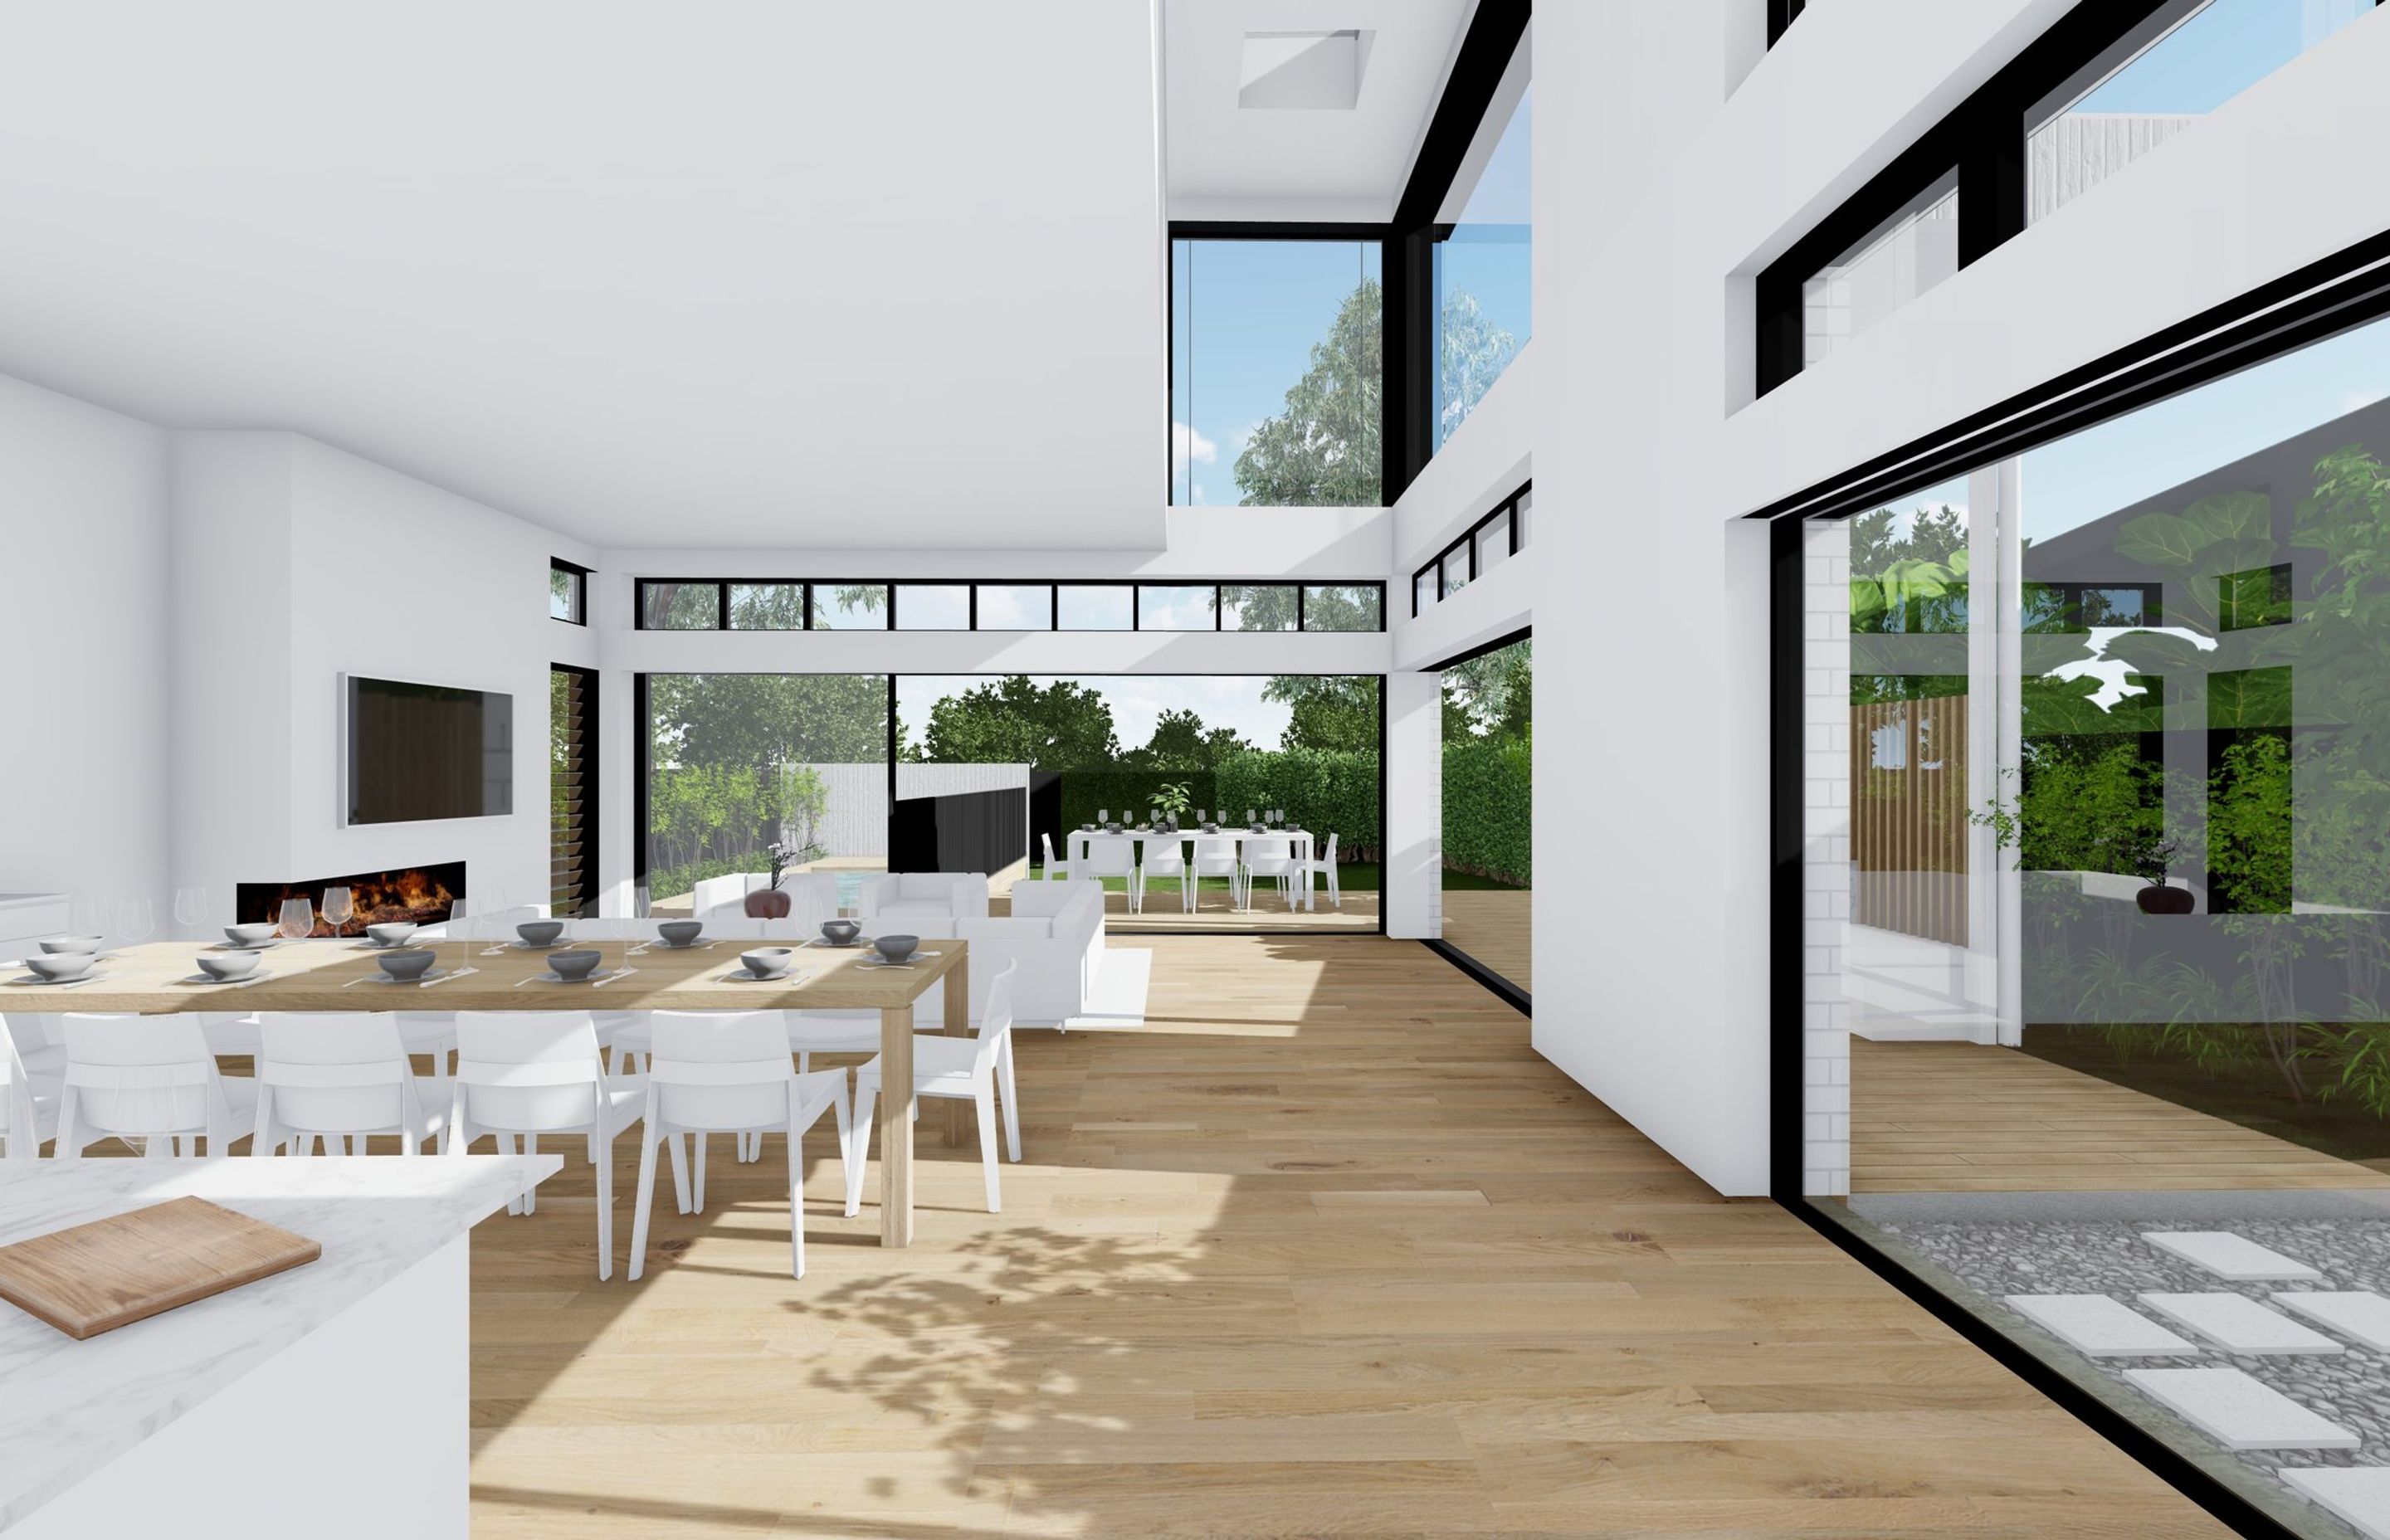 House For An Interior Designer